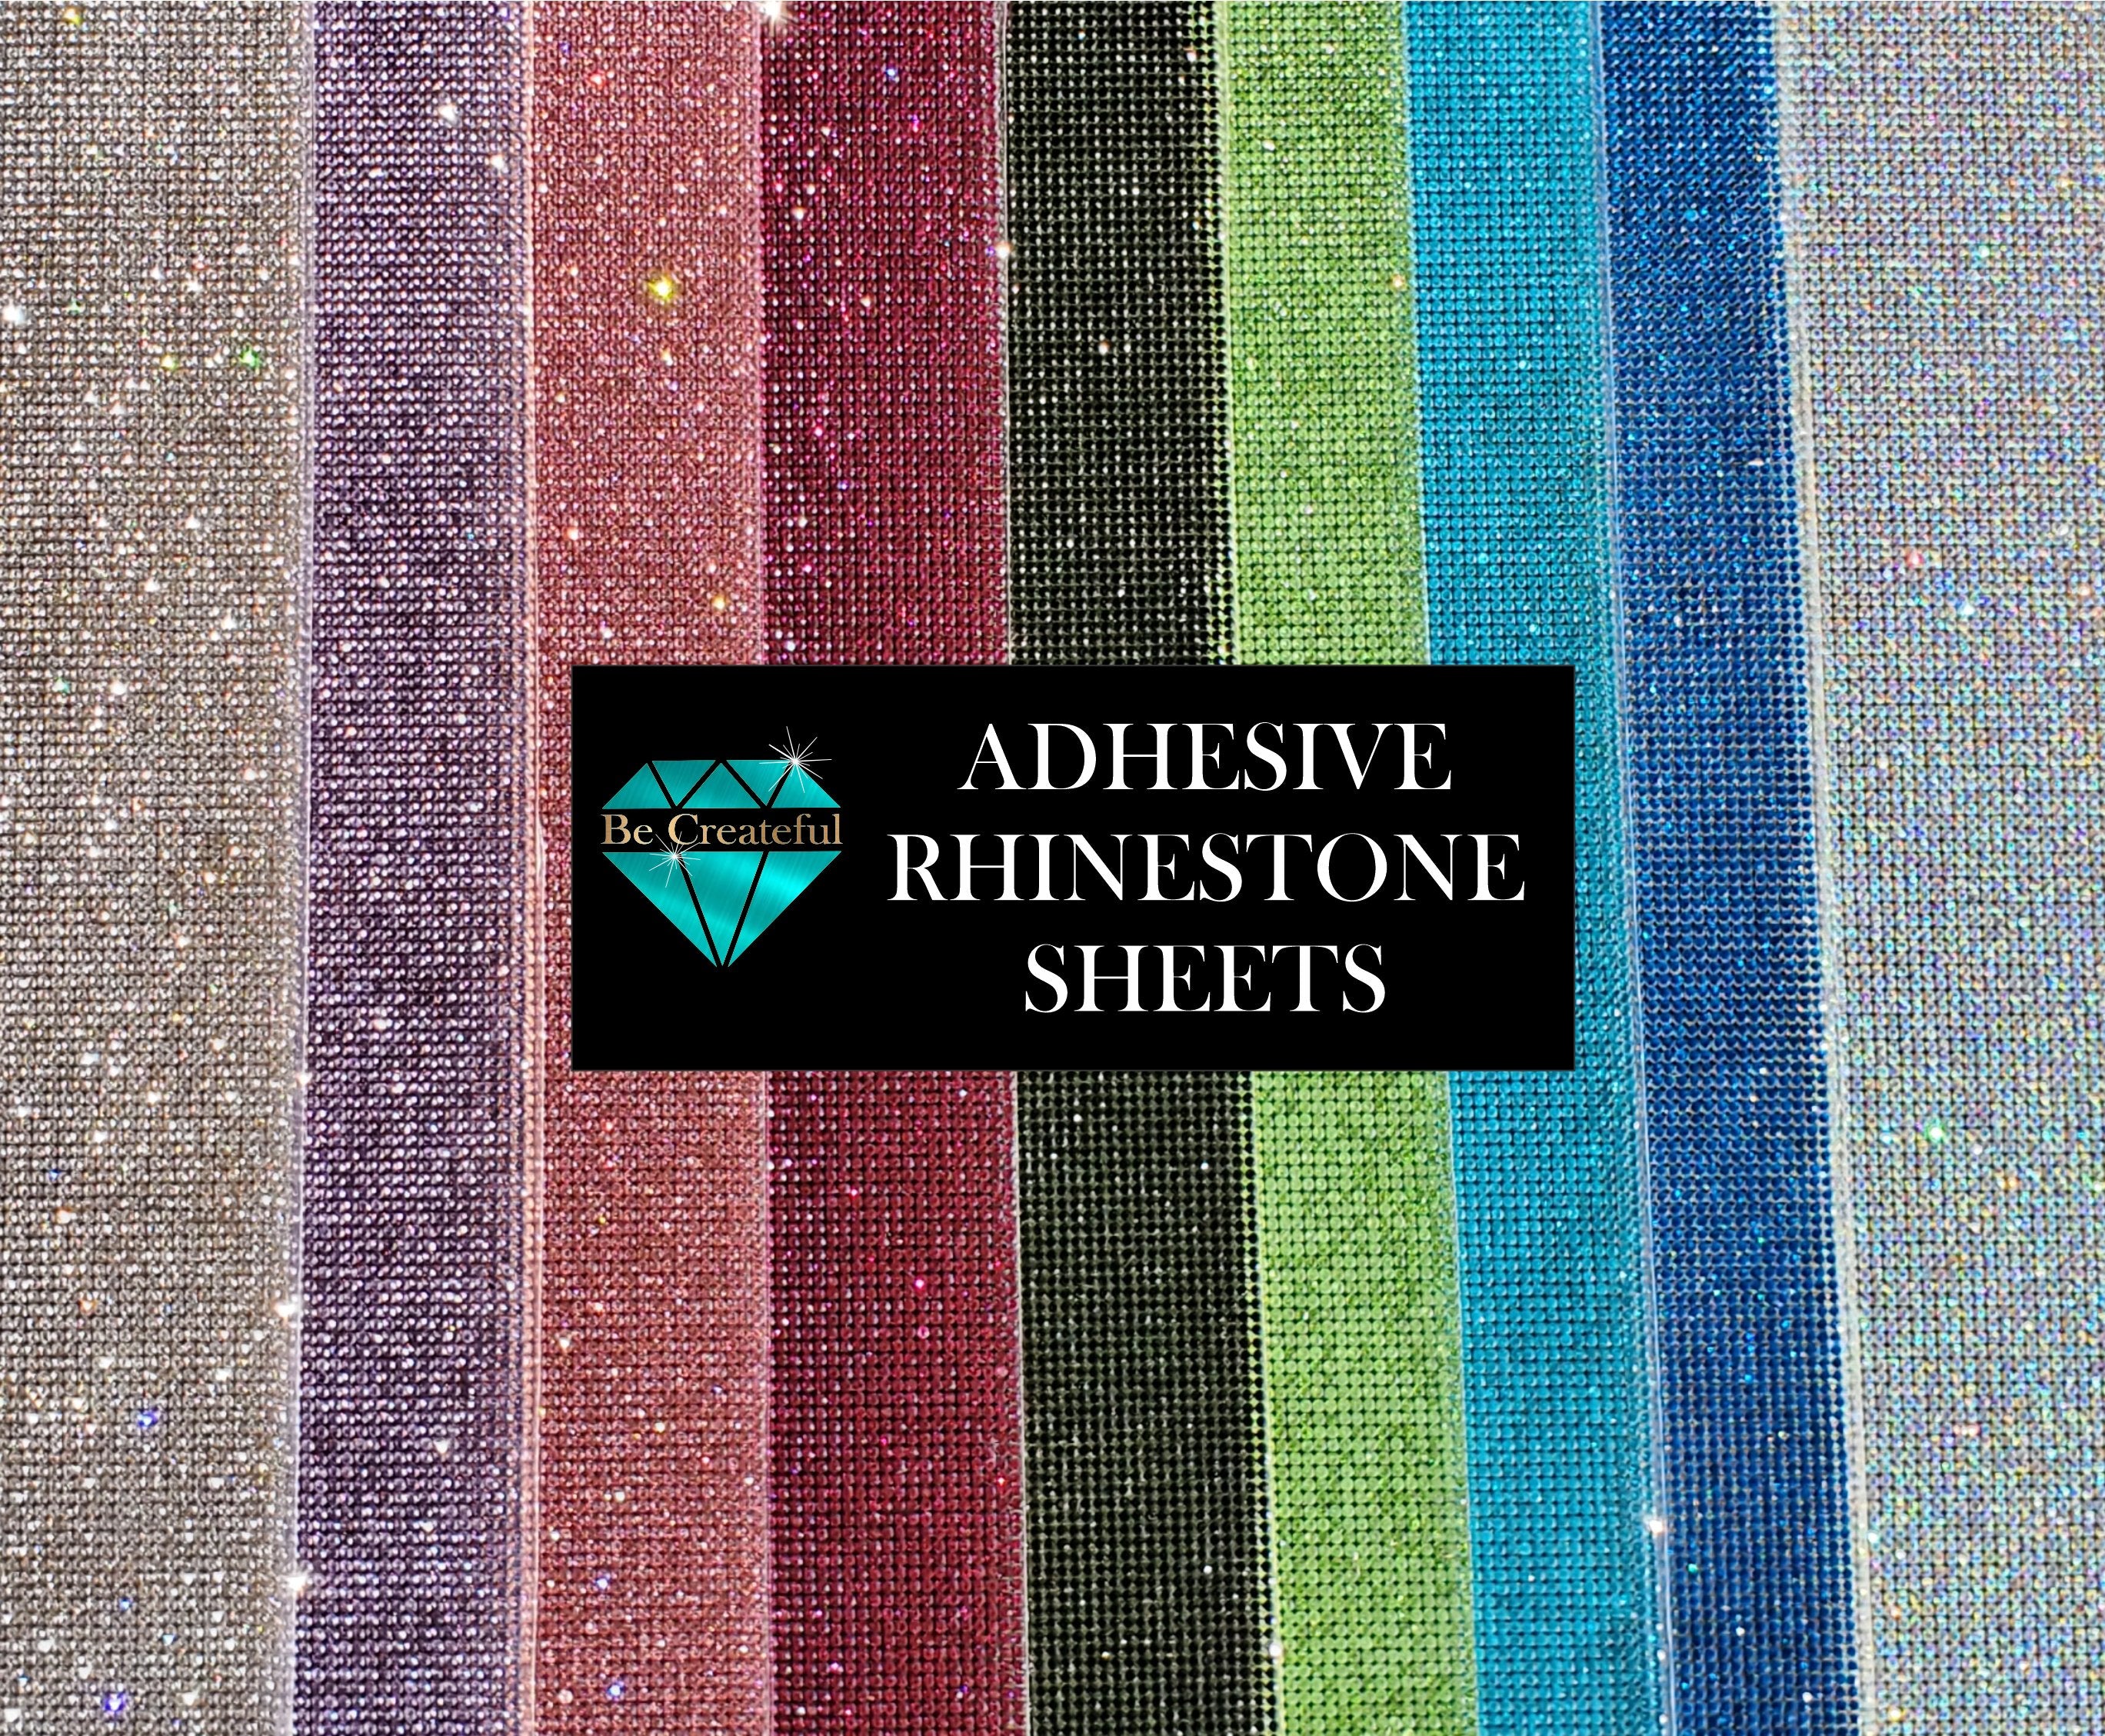 Rhinestone Sheet W Adhesive Backedbaby Blue Rhinestonerhinestone Stickers  Sheet Decoration Bling Crystal Rhinestone Sheets Self Adhesive 